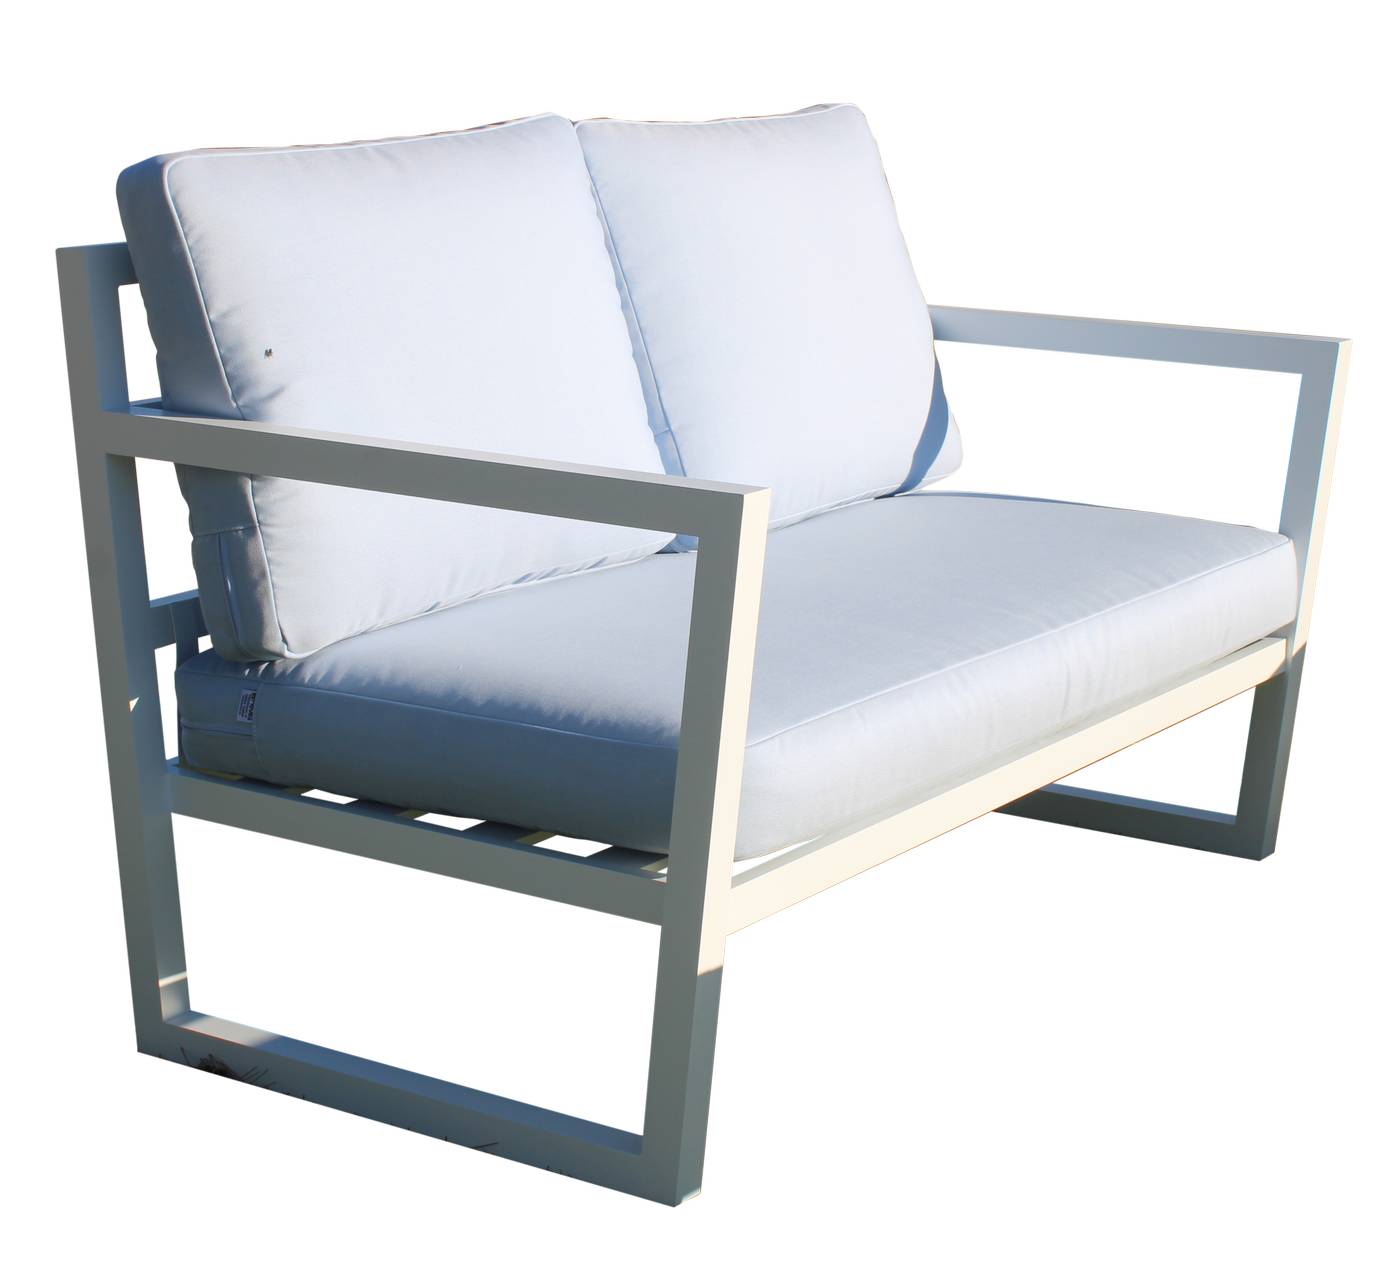 Sofá 2p + 2 sillones + taburetes, aluminio [Piona] - Conjunto de aluminio para exterior: sofá 2 plazas + 2 sillones + mesa de centro + 2 taburetes. Disponible en cinco colores diferentes.